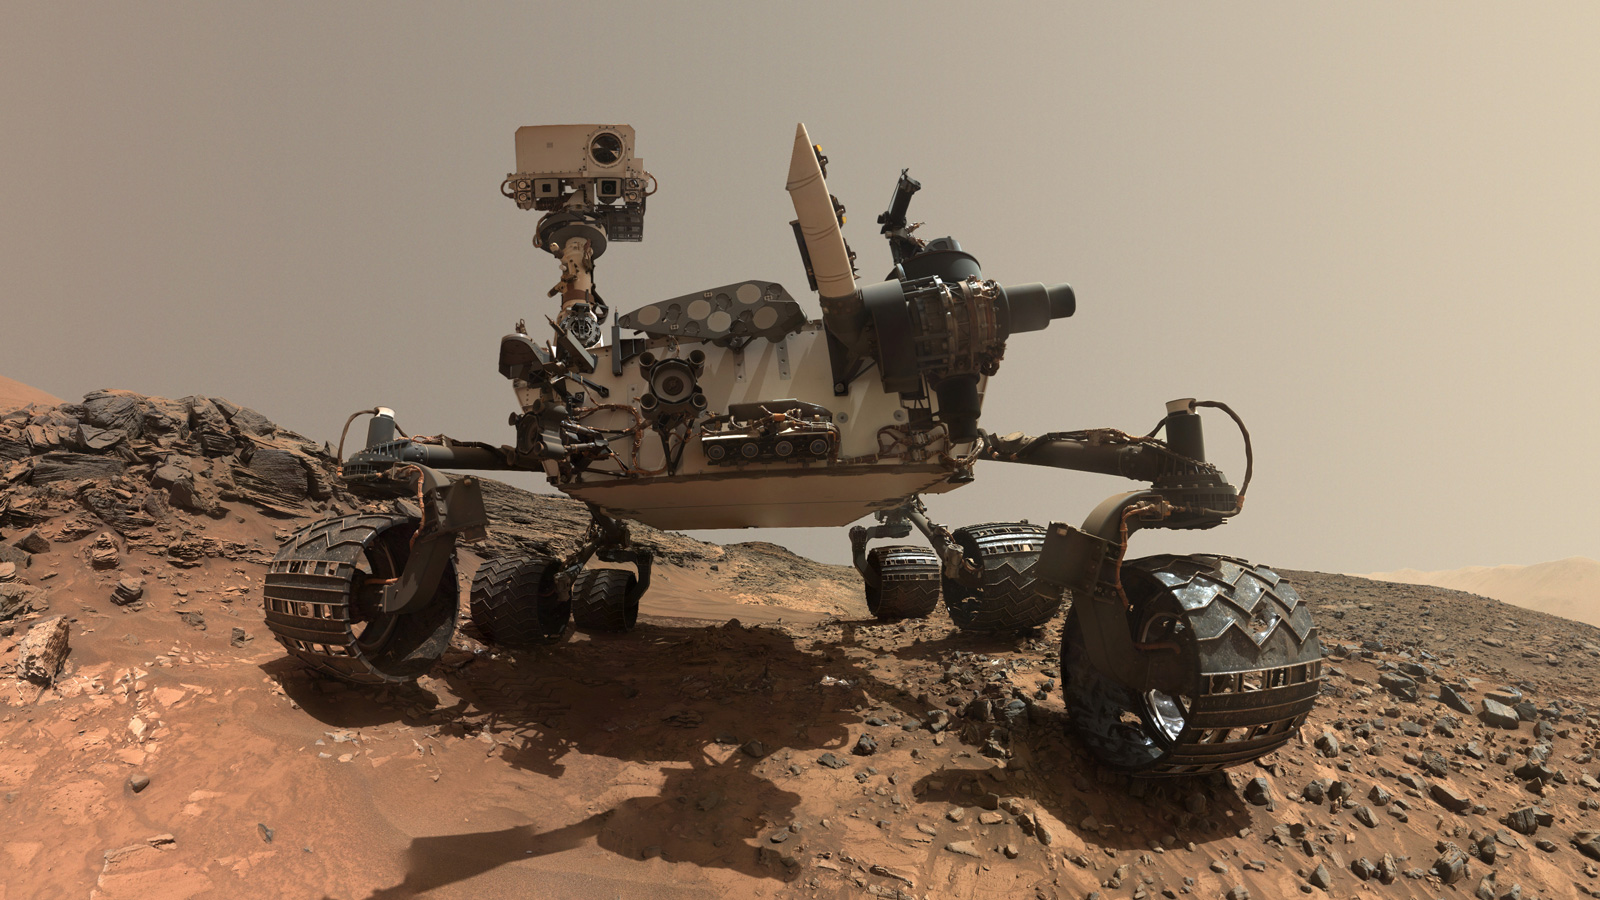 Curiosity rover model